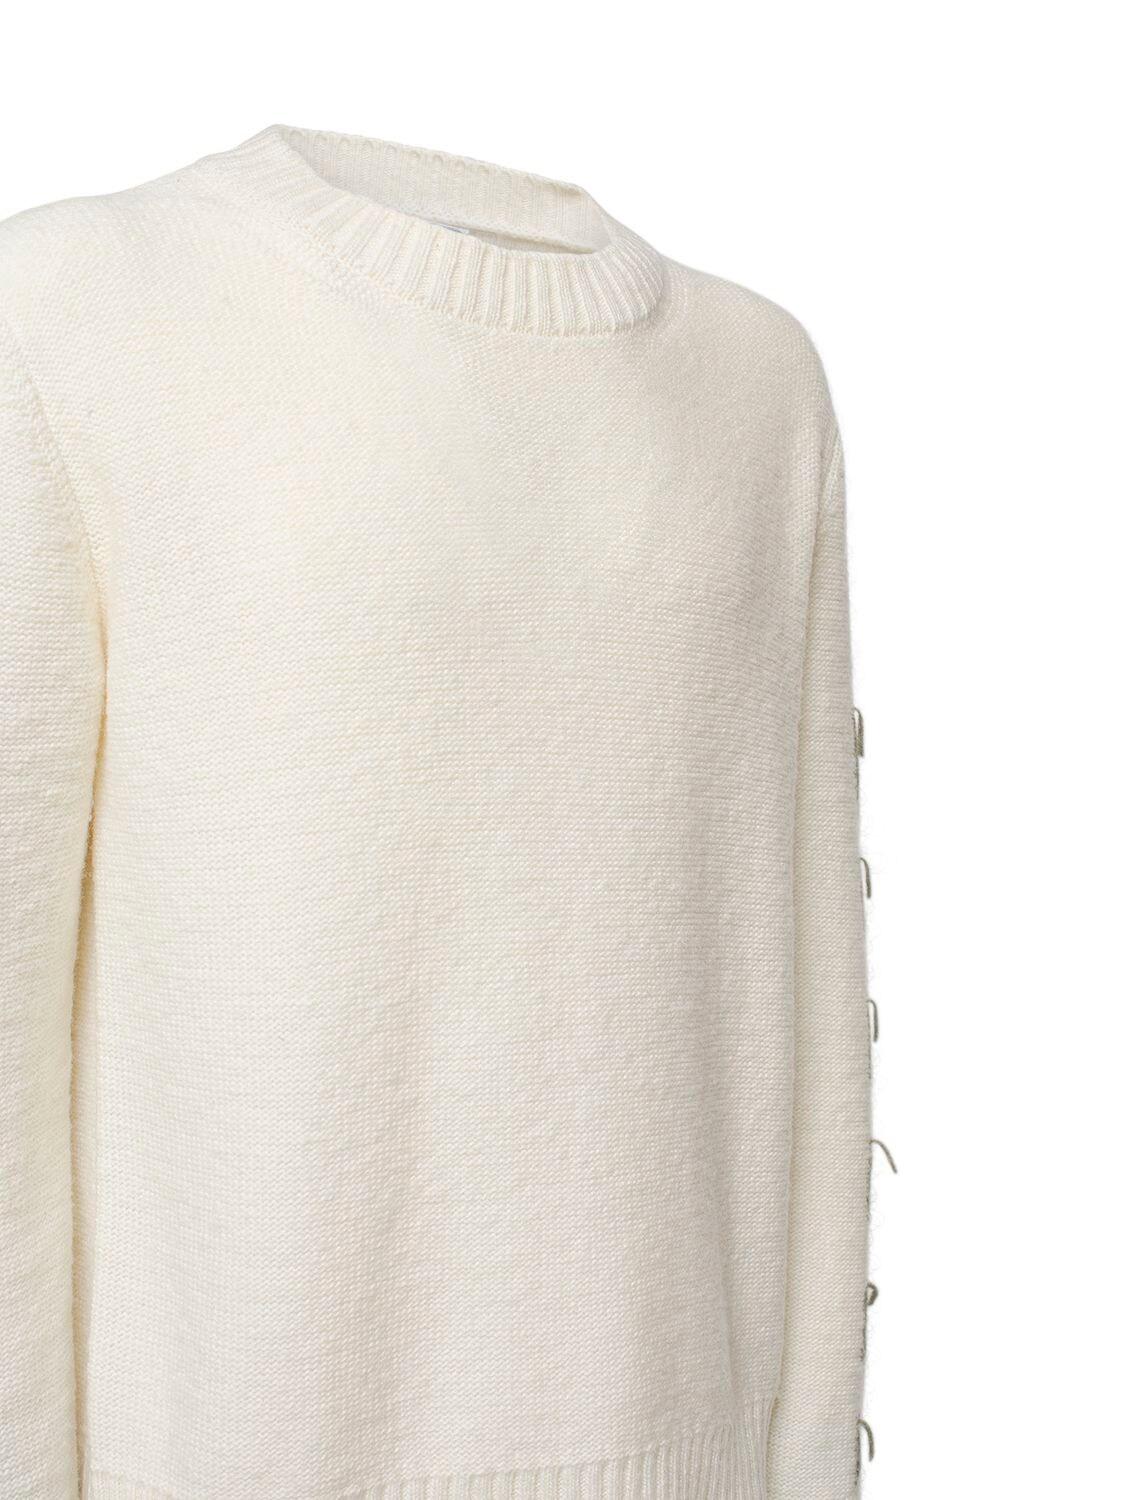 Off-White c/o Virgil Abloh Reverse Arrow Diag Knit Sweater for Men 